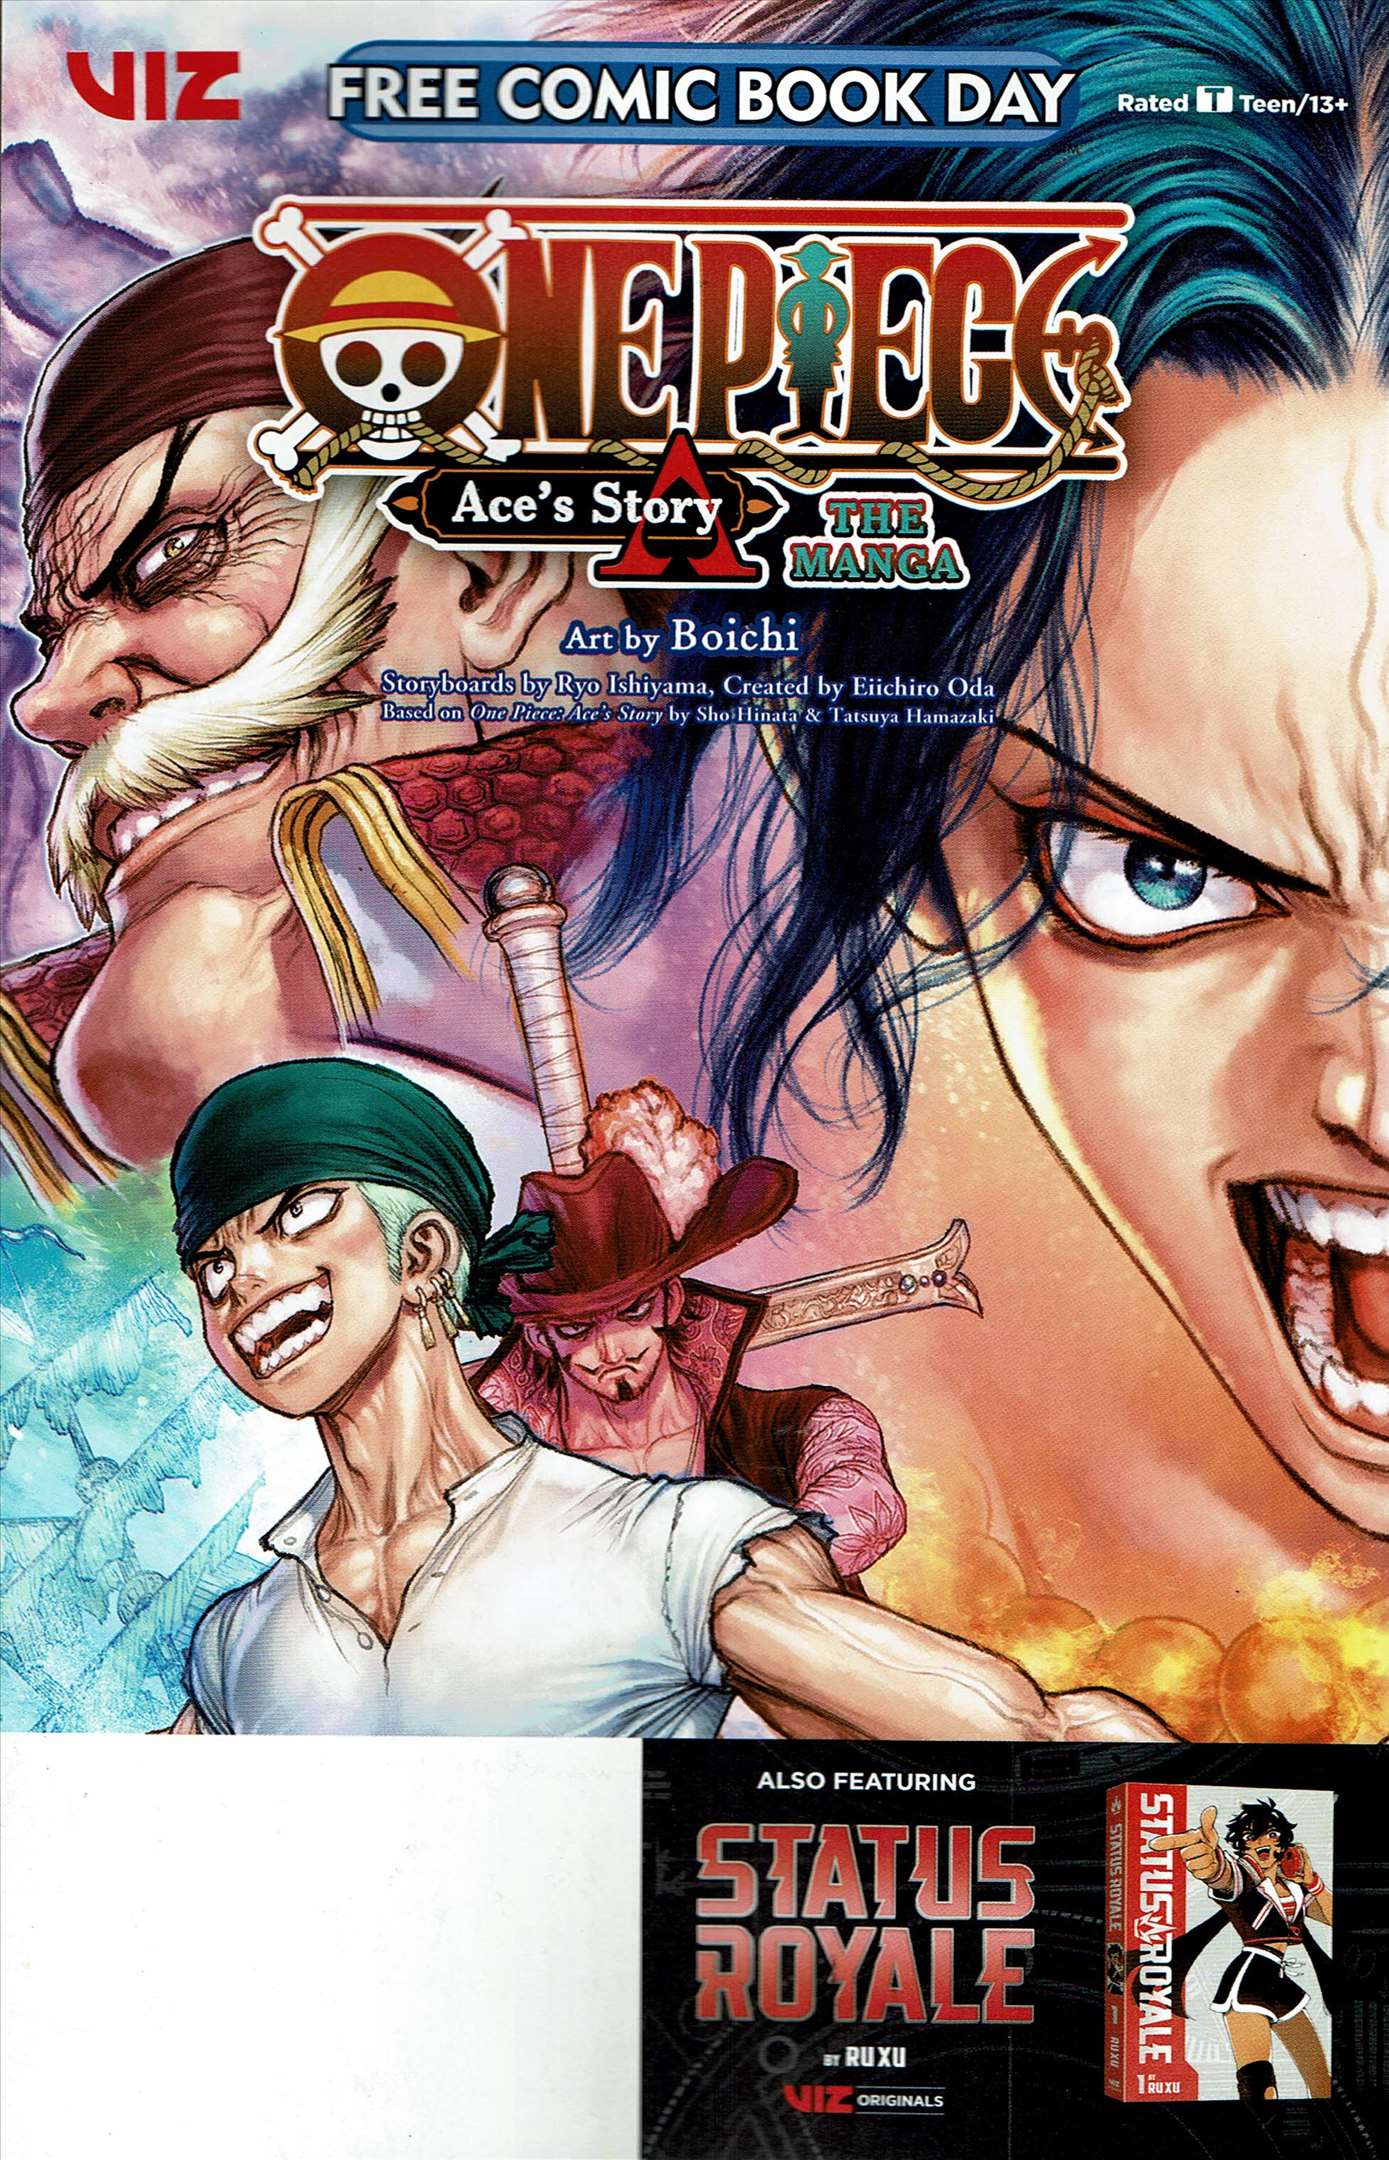 Free Comic Book Day (Viz) #2024B VF/NM ; Viz | One Piece Ace's Story